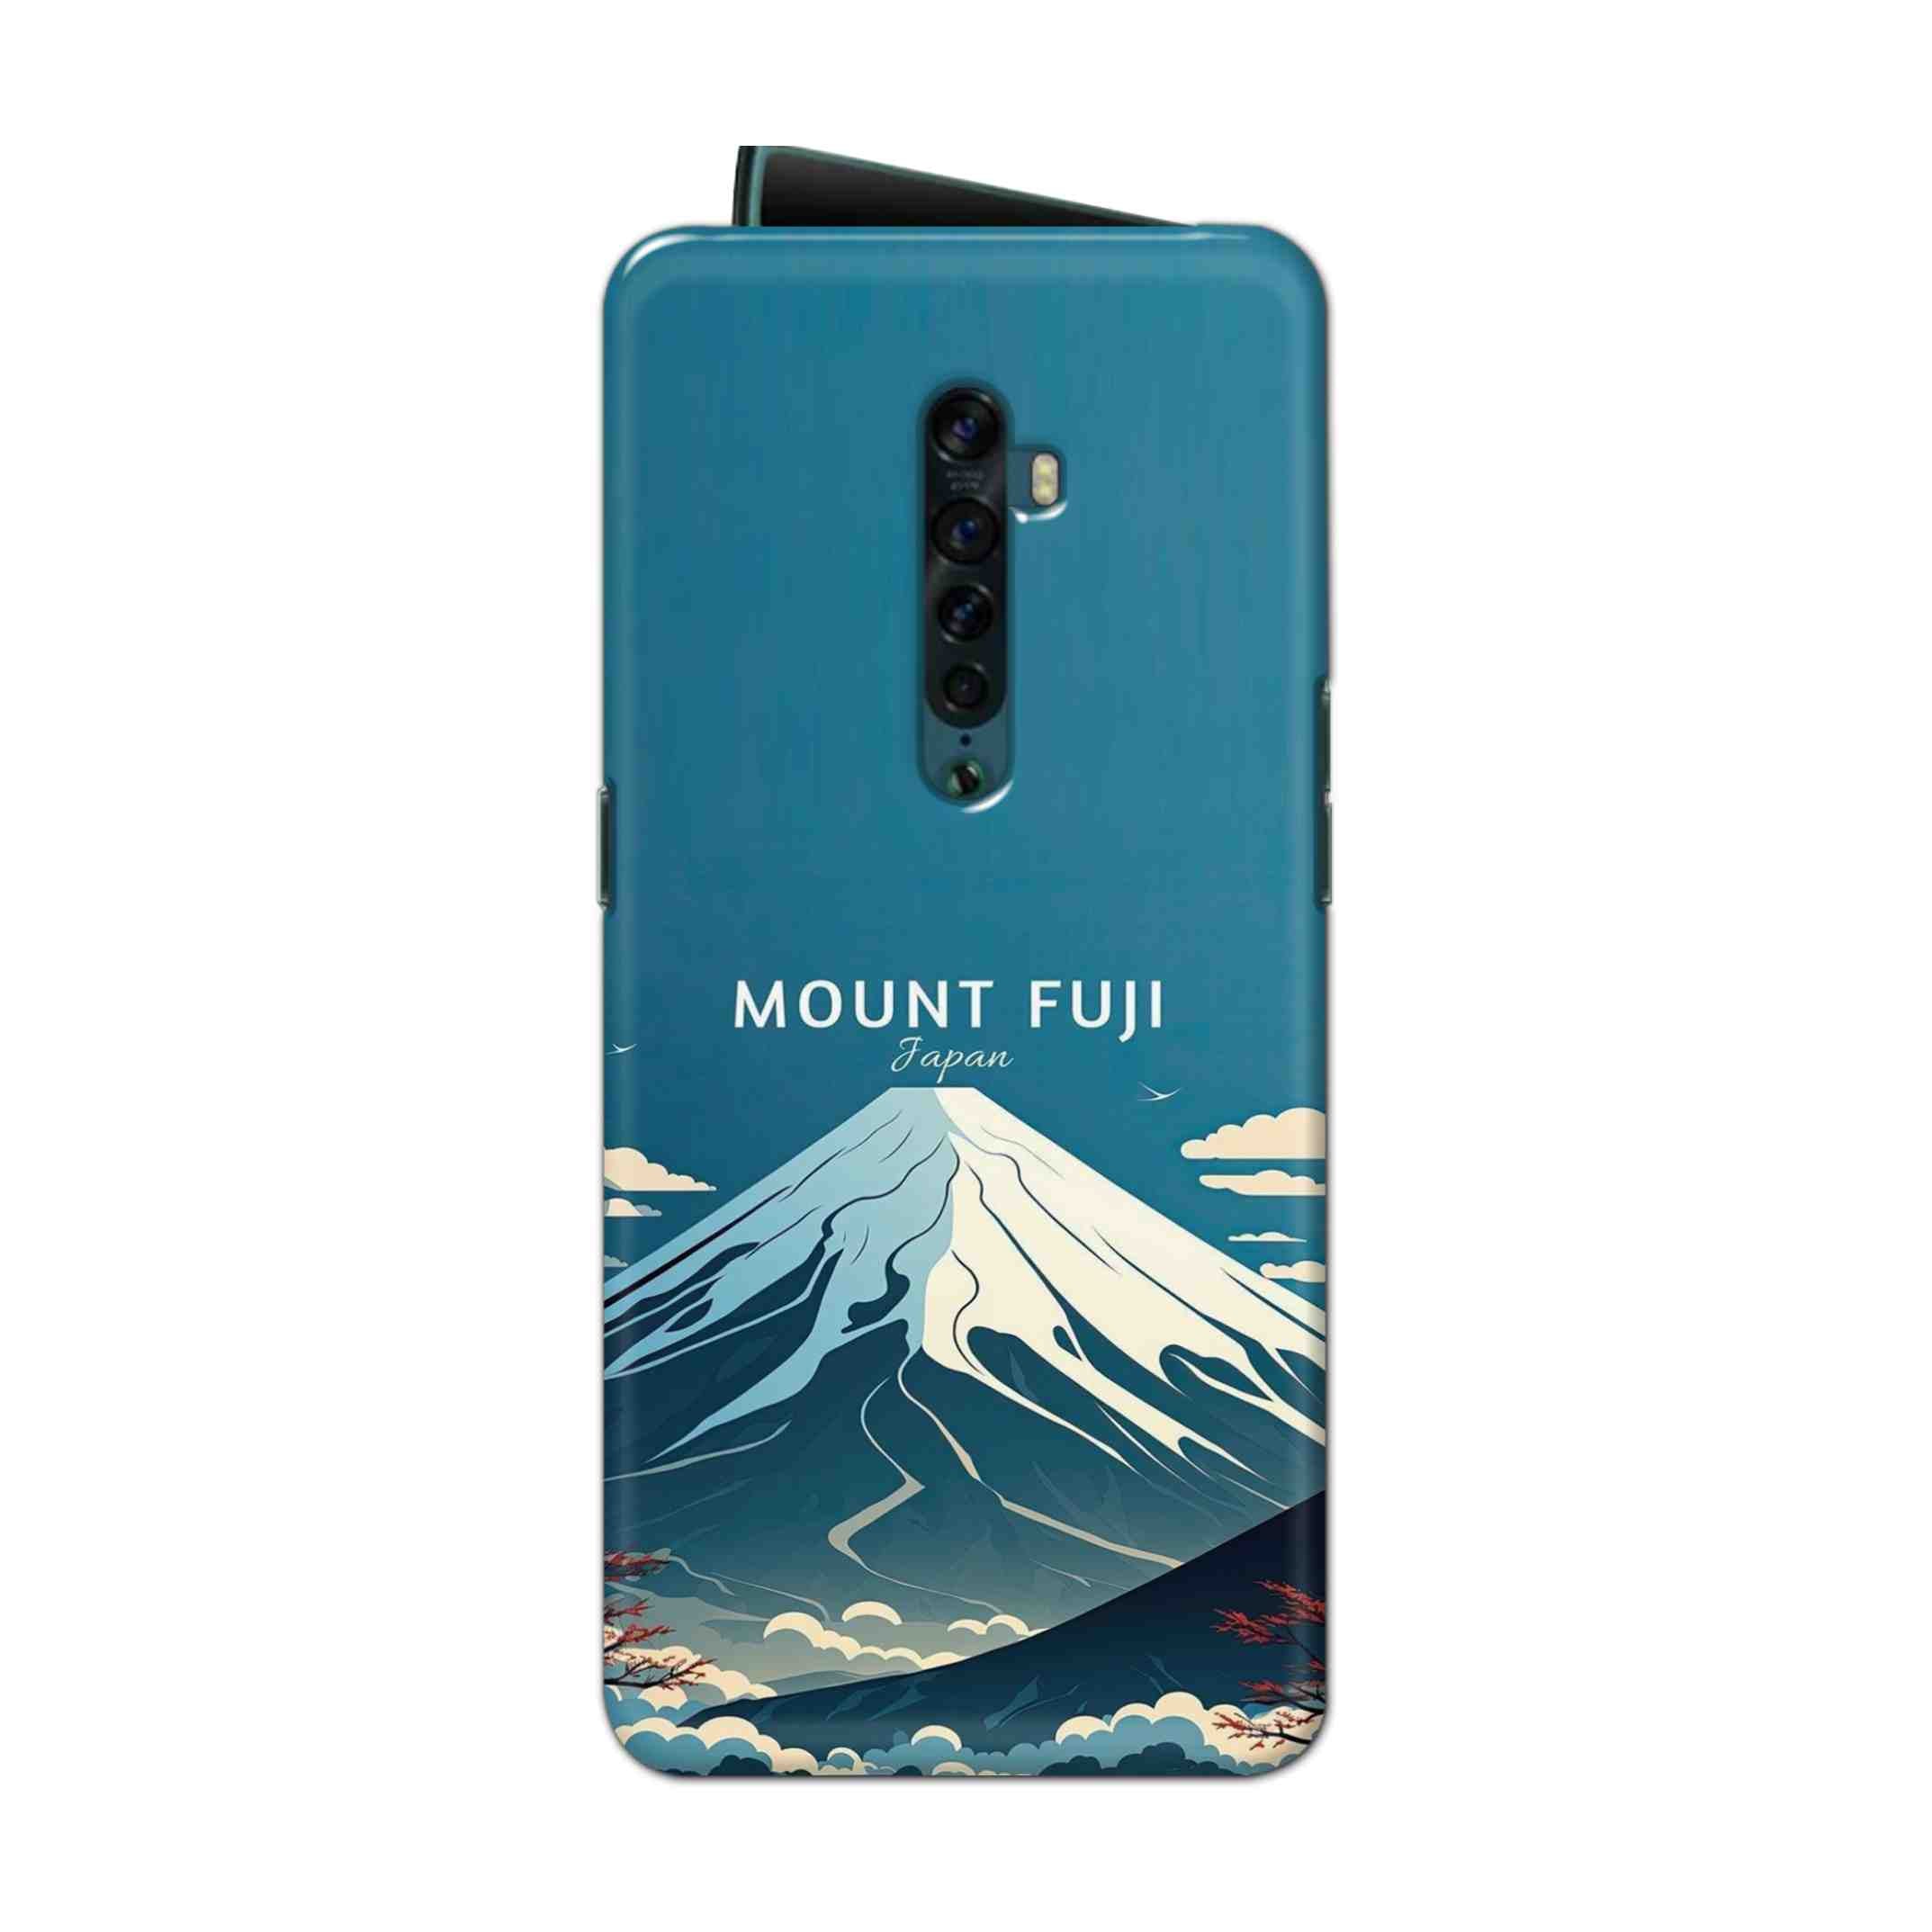 Buy Mount Fuji Hard Back Mobile Phone Case Cover For Oppo Reno 2 Online